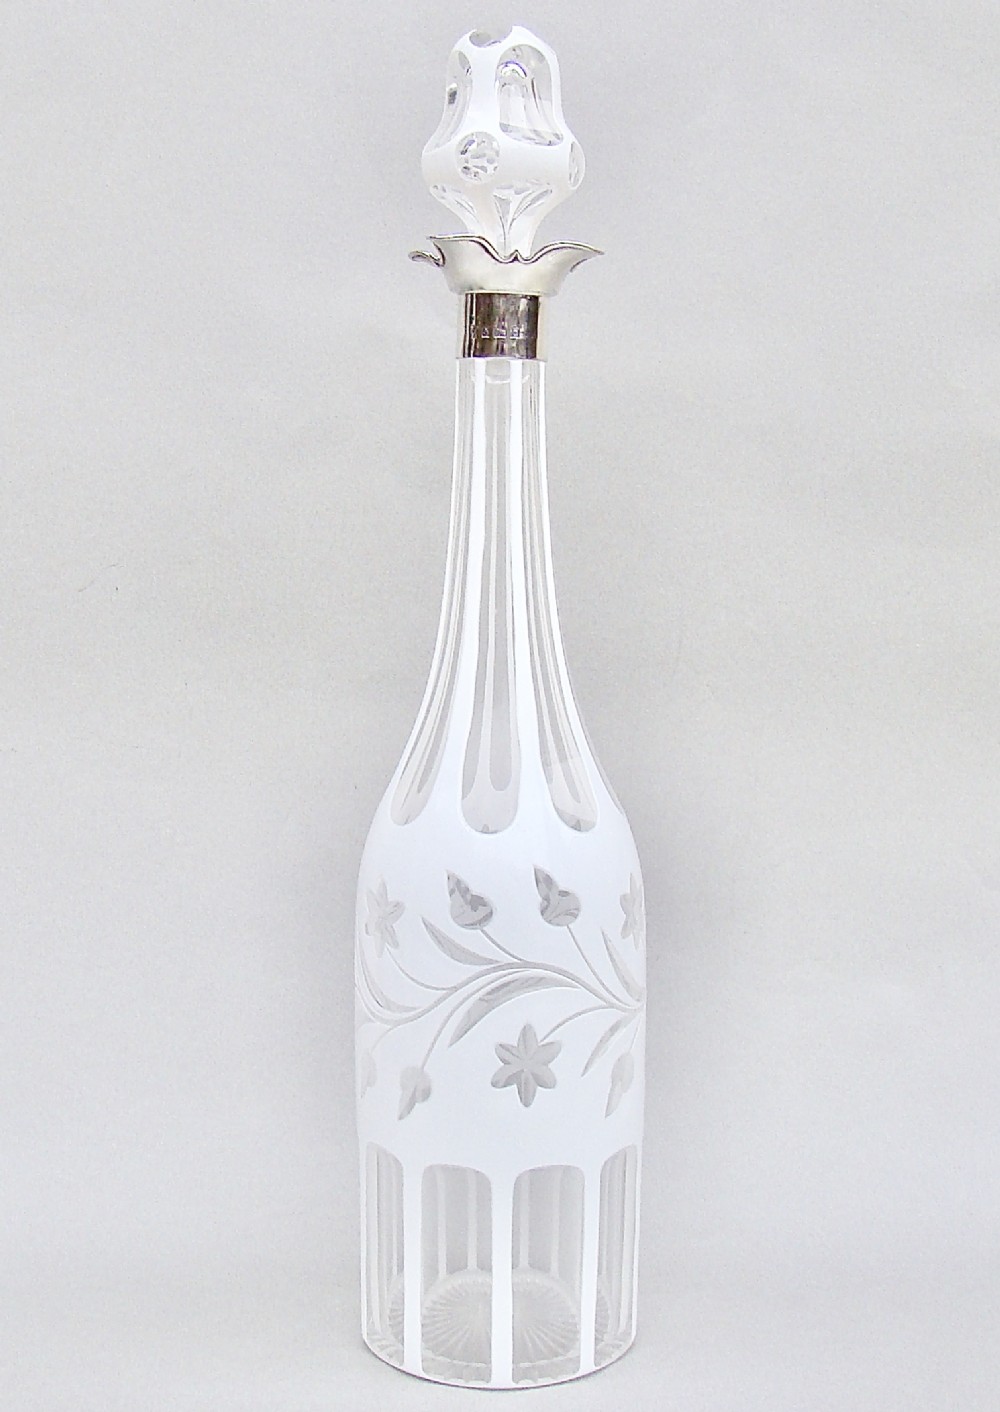 rare edwardian silver mounted bohemian glass decanter by latham morton birmingham 1902